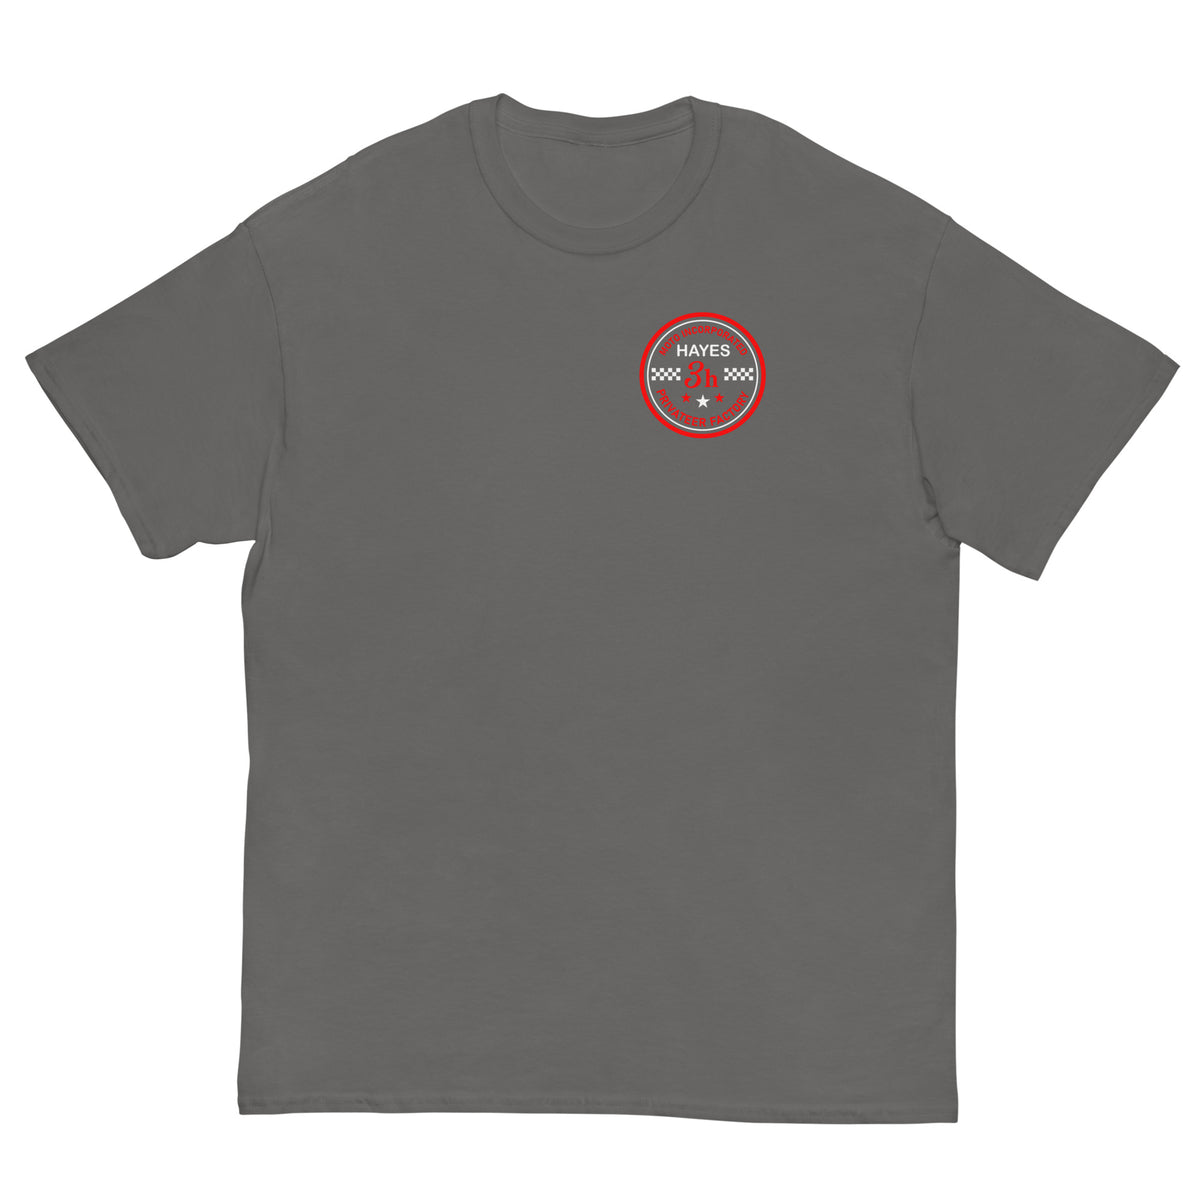 Hayes 3h - Badge - T-Shirt